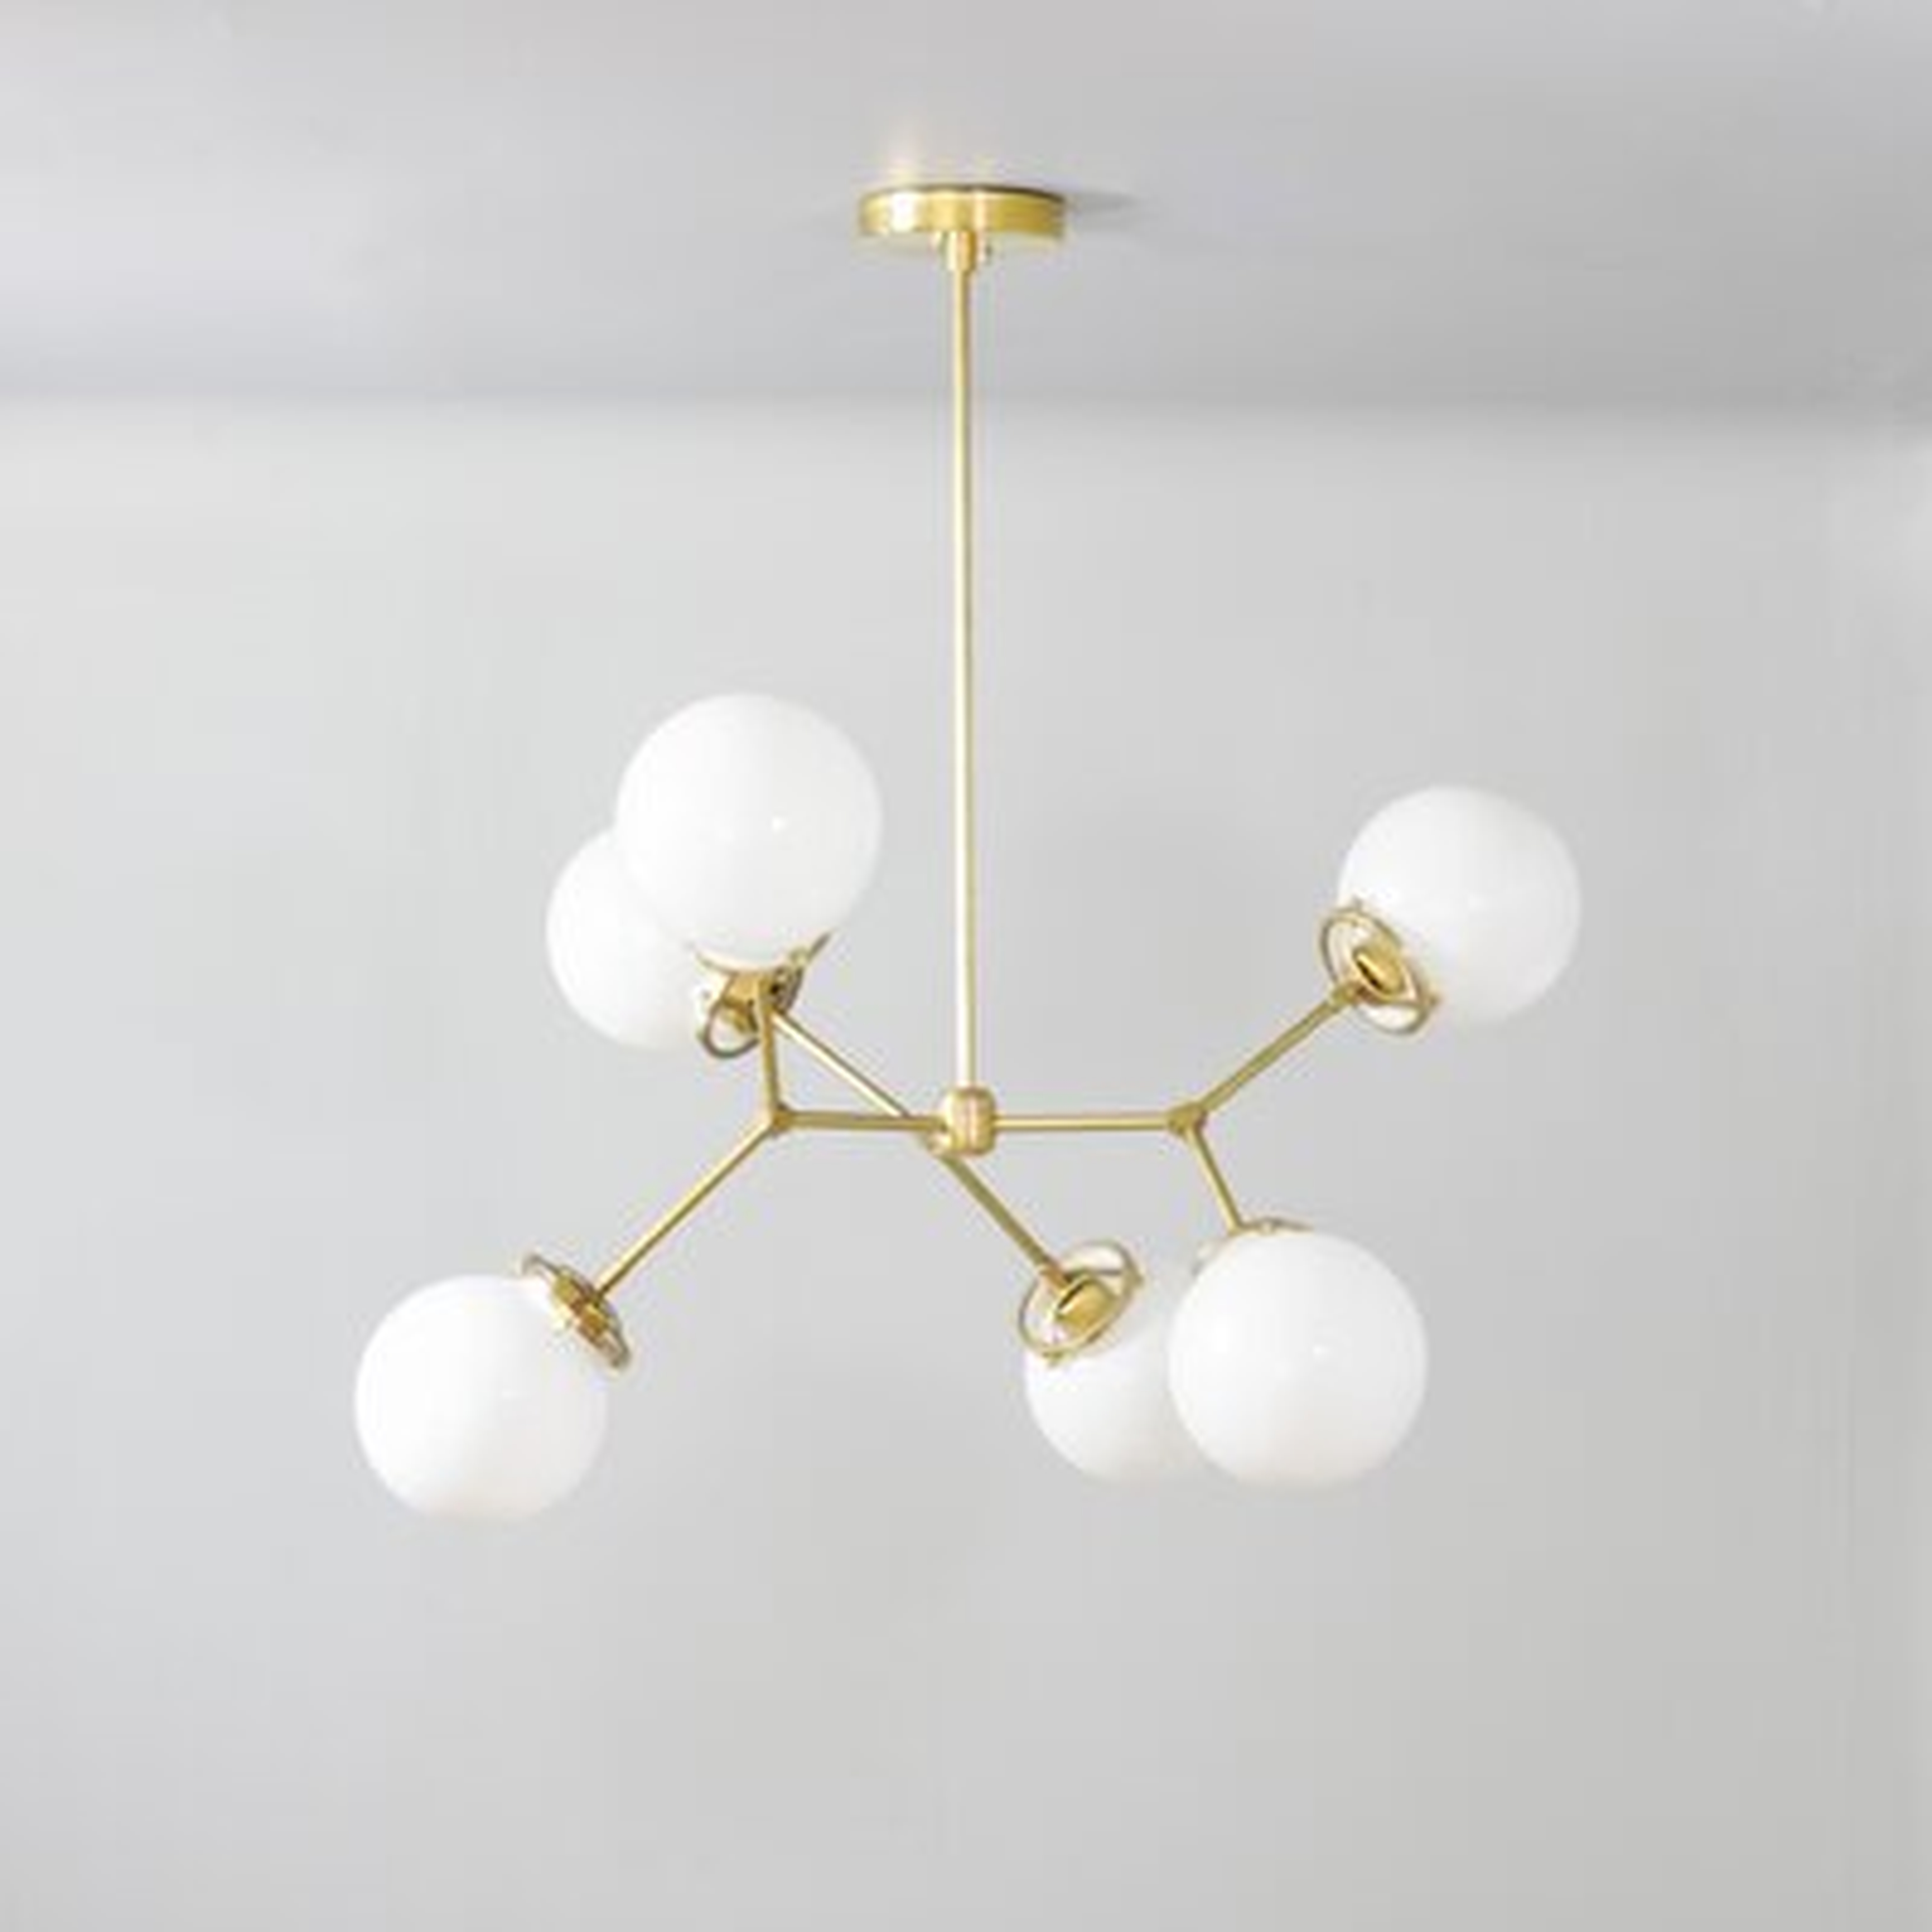 Sputnik Chandelier | Mid Century Modern | Light Fixture | Starburst Globe Chandelier | Dining Room | Ceiling Pendant | Industrial Lighting - Wayfair